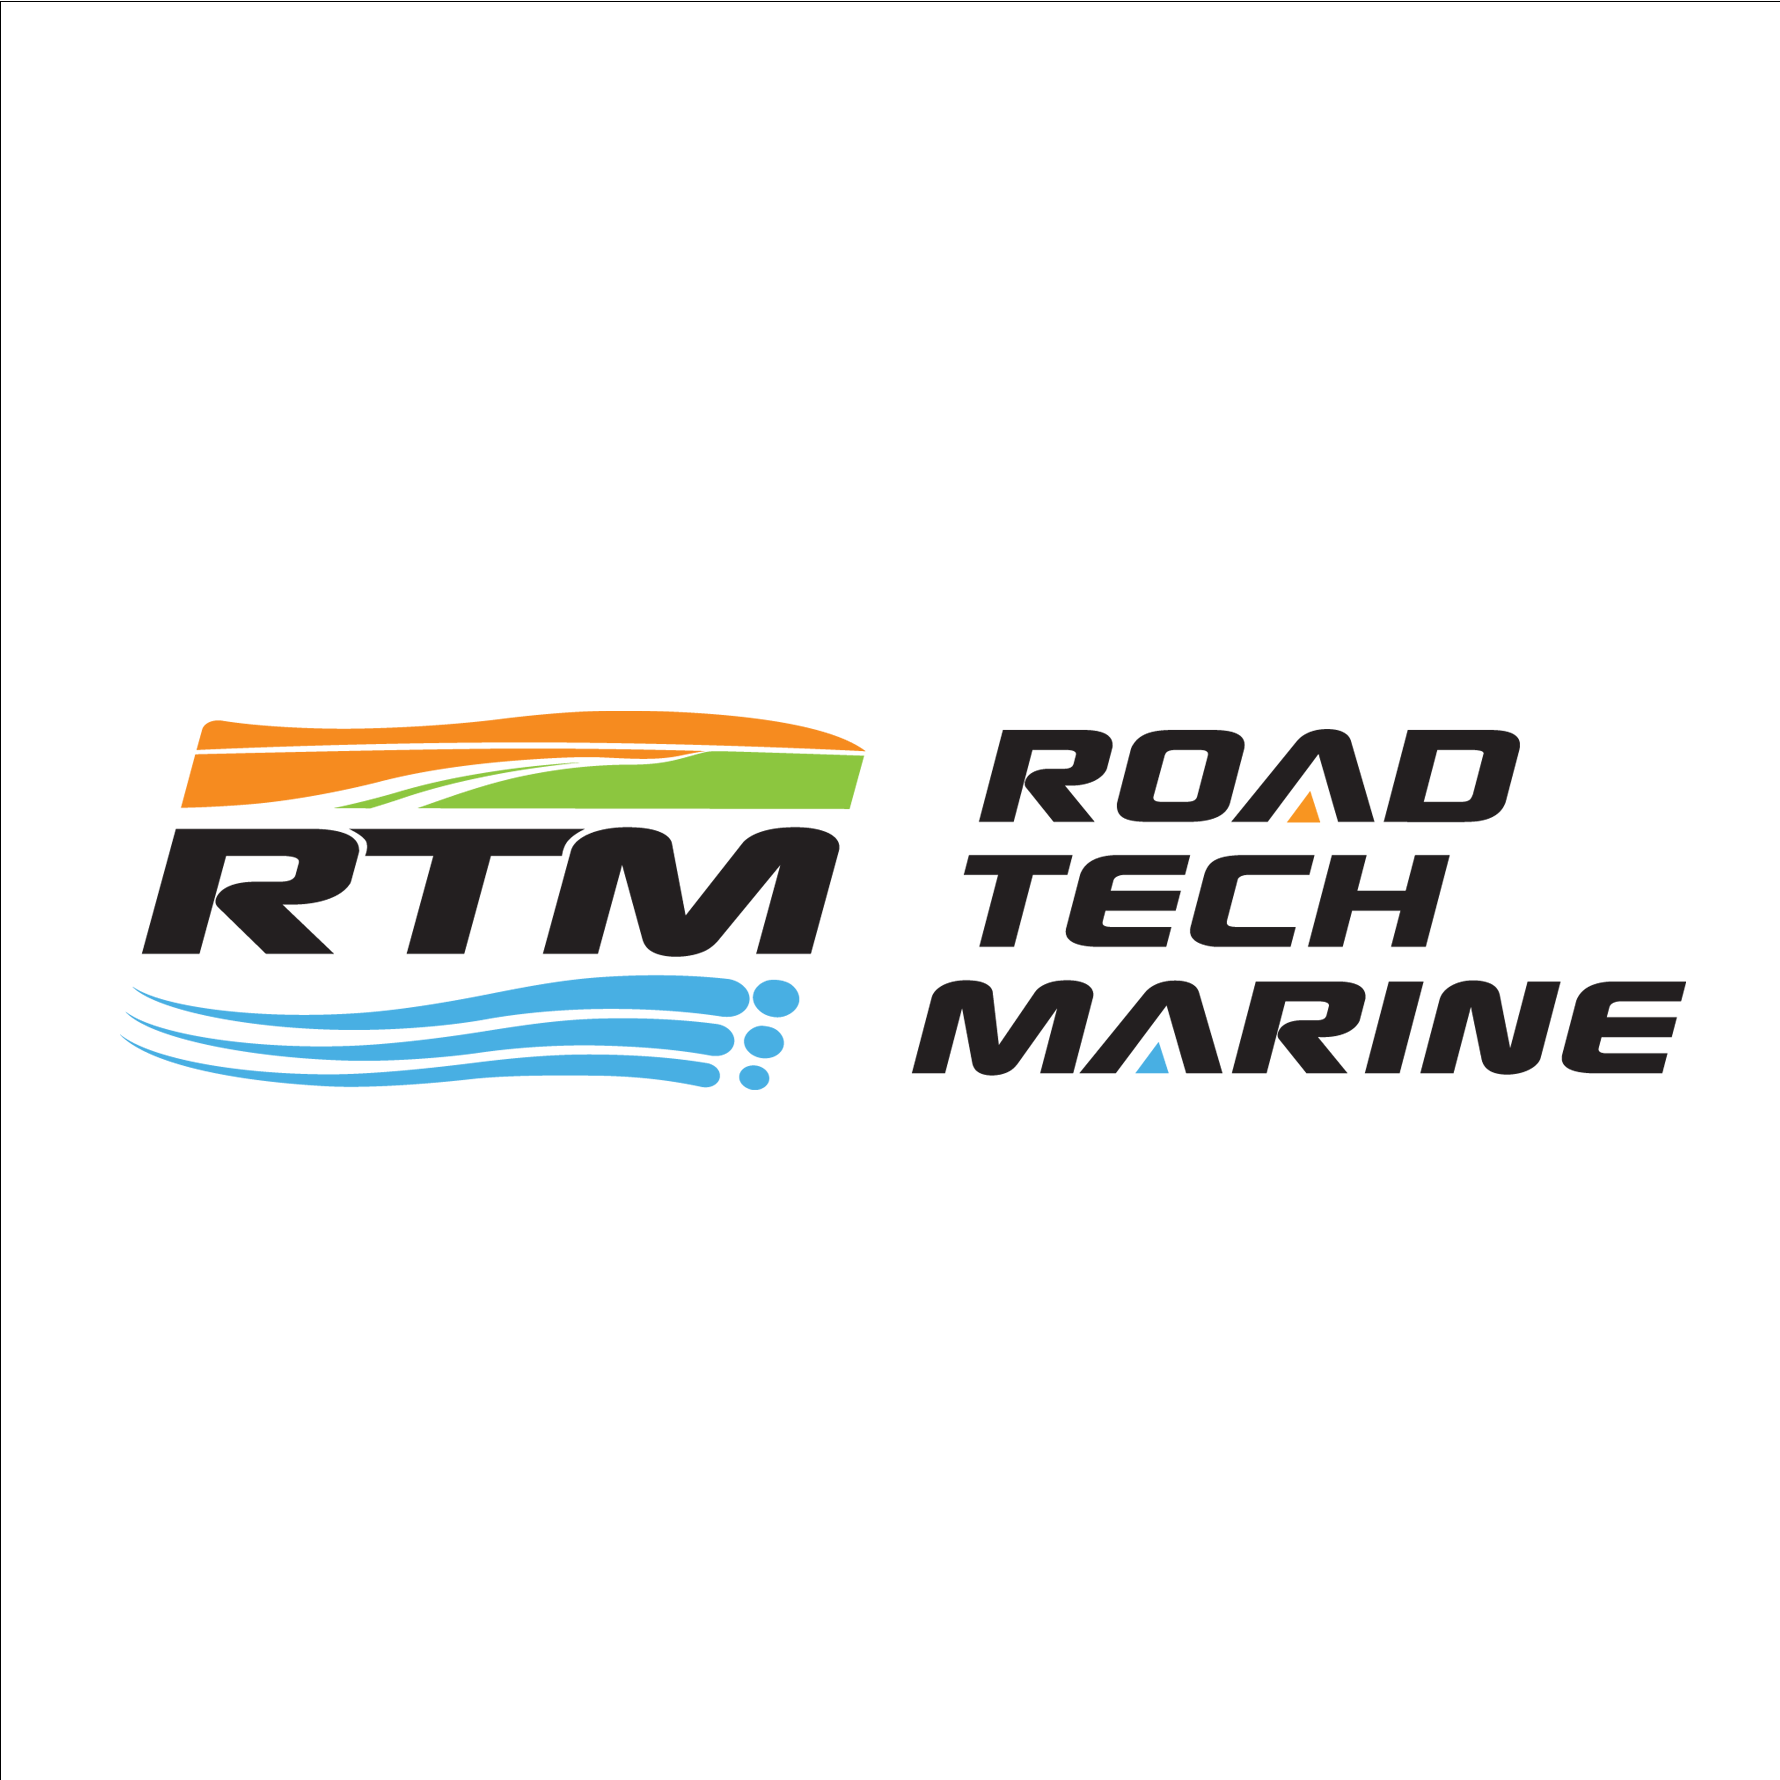 RTM - Road Tech Marine Townsville Logo